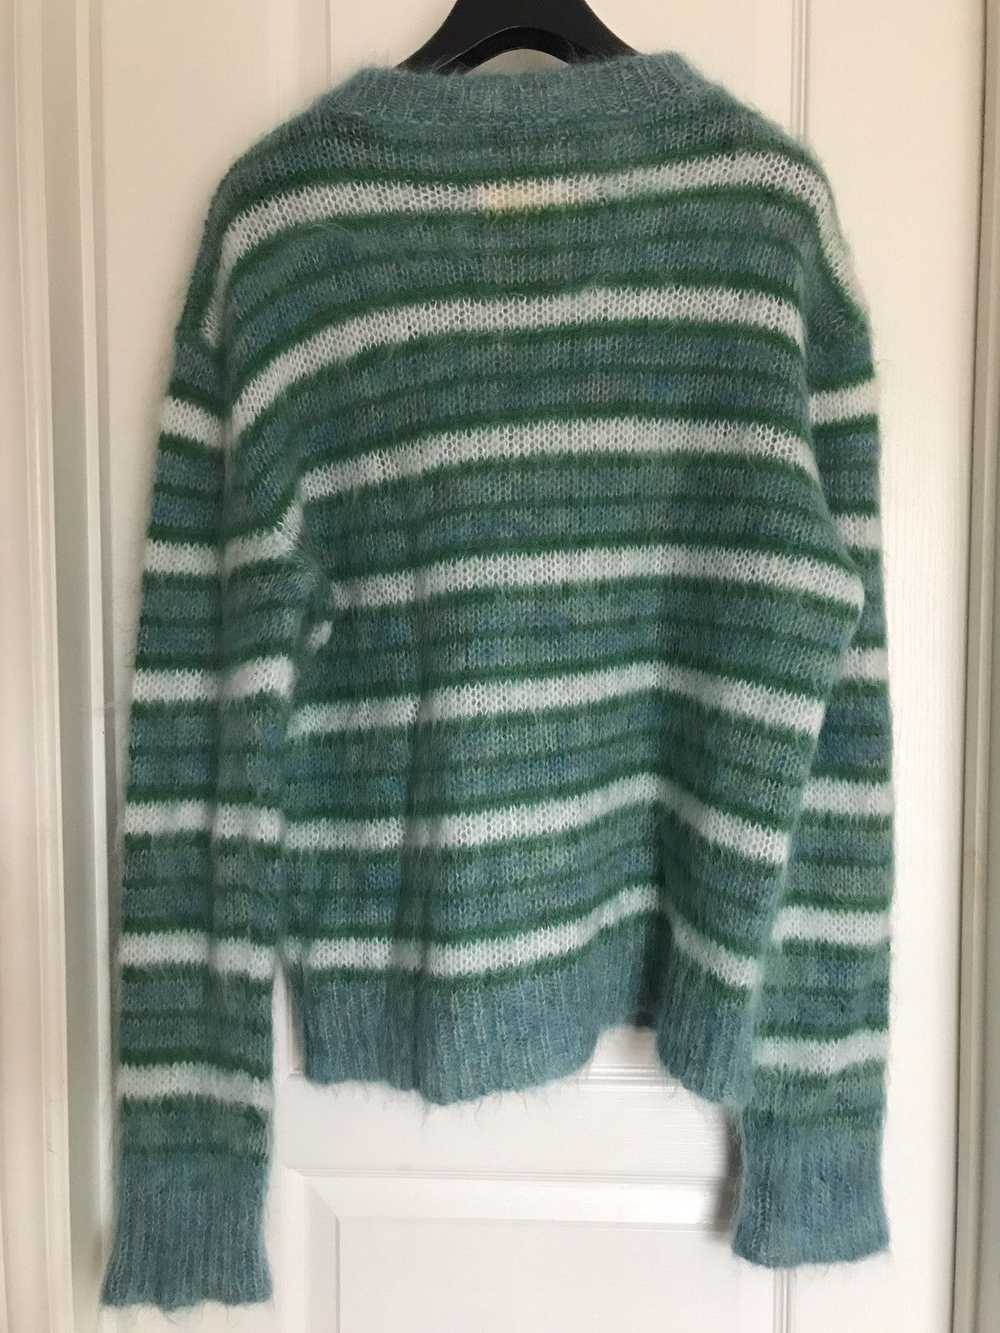 Marni Striped Mohair Sweater - image 2